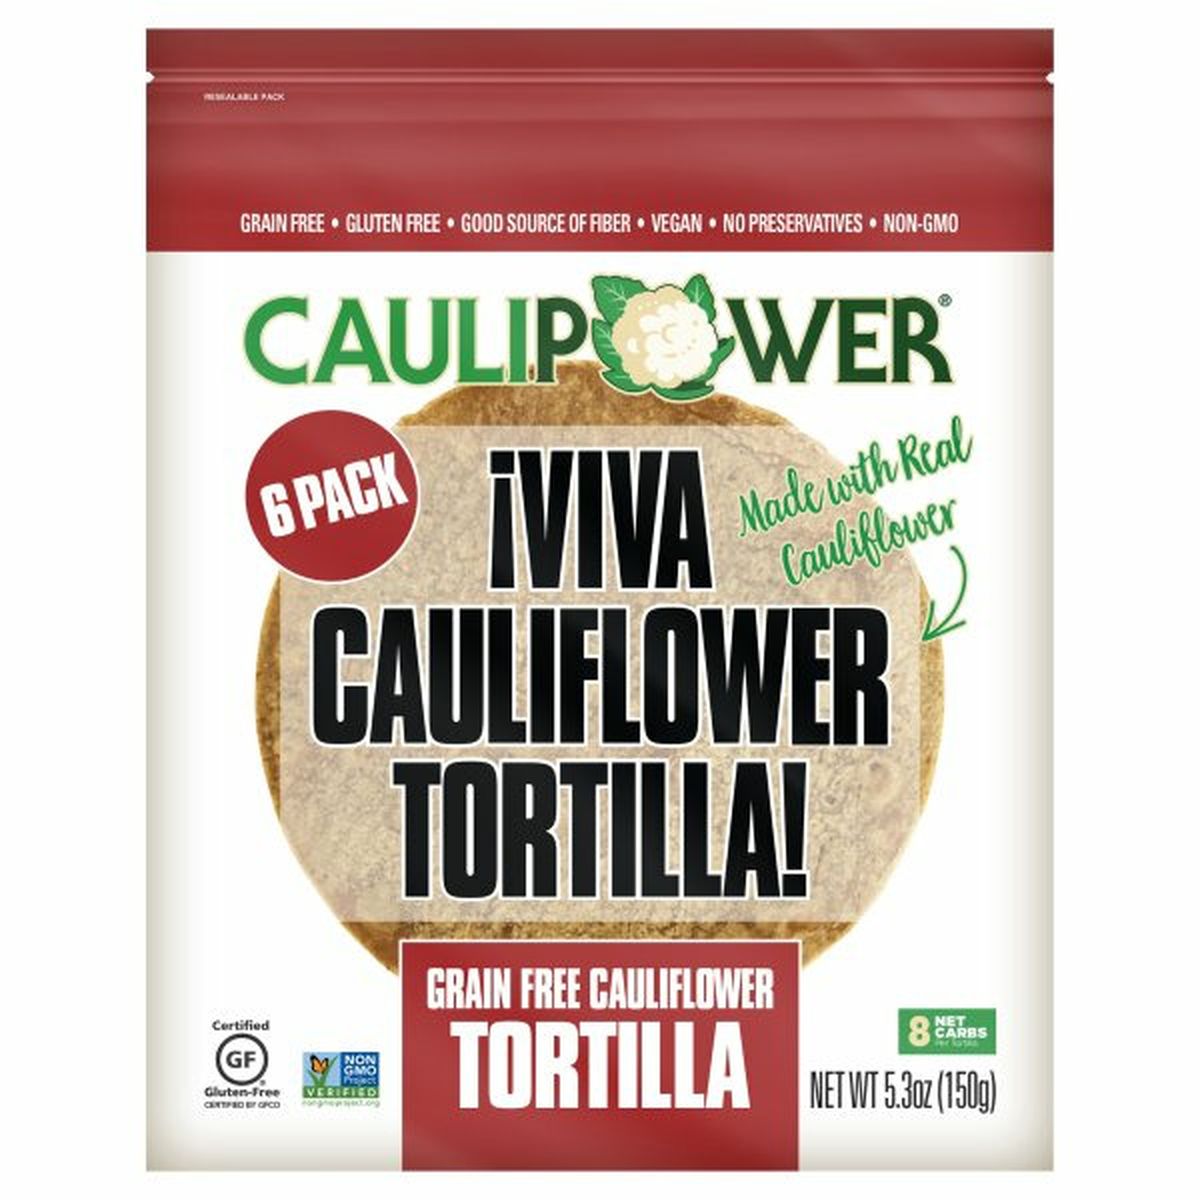 Calories in Caulipower Cauliflower Tortilla, Grain Free, 6 Pack